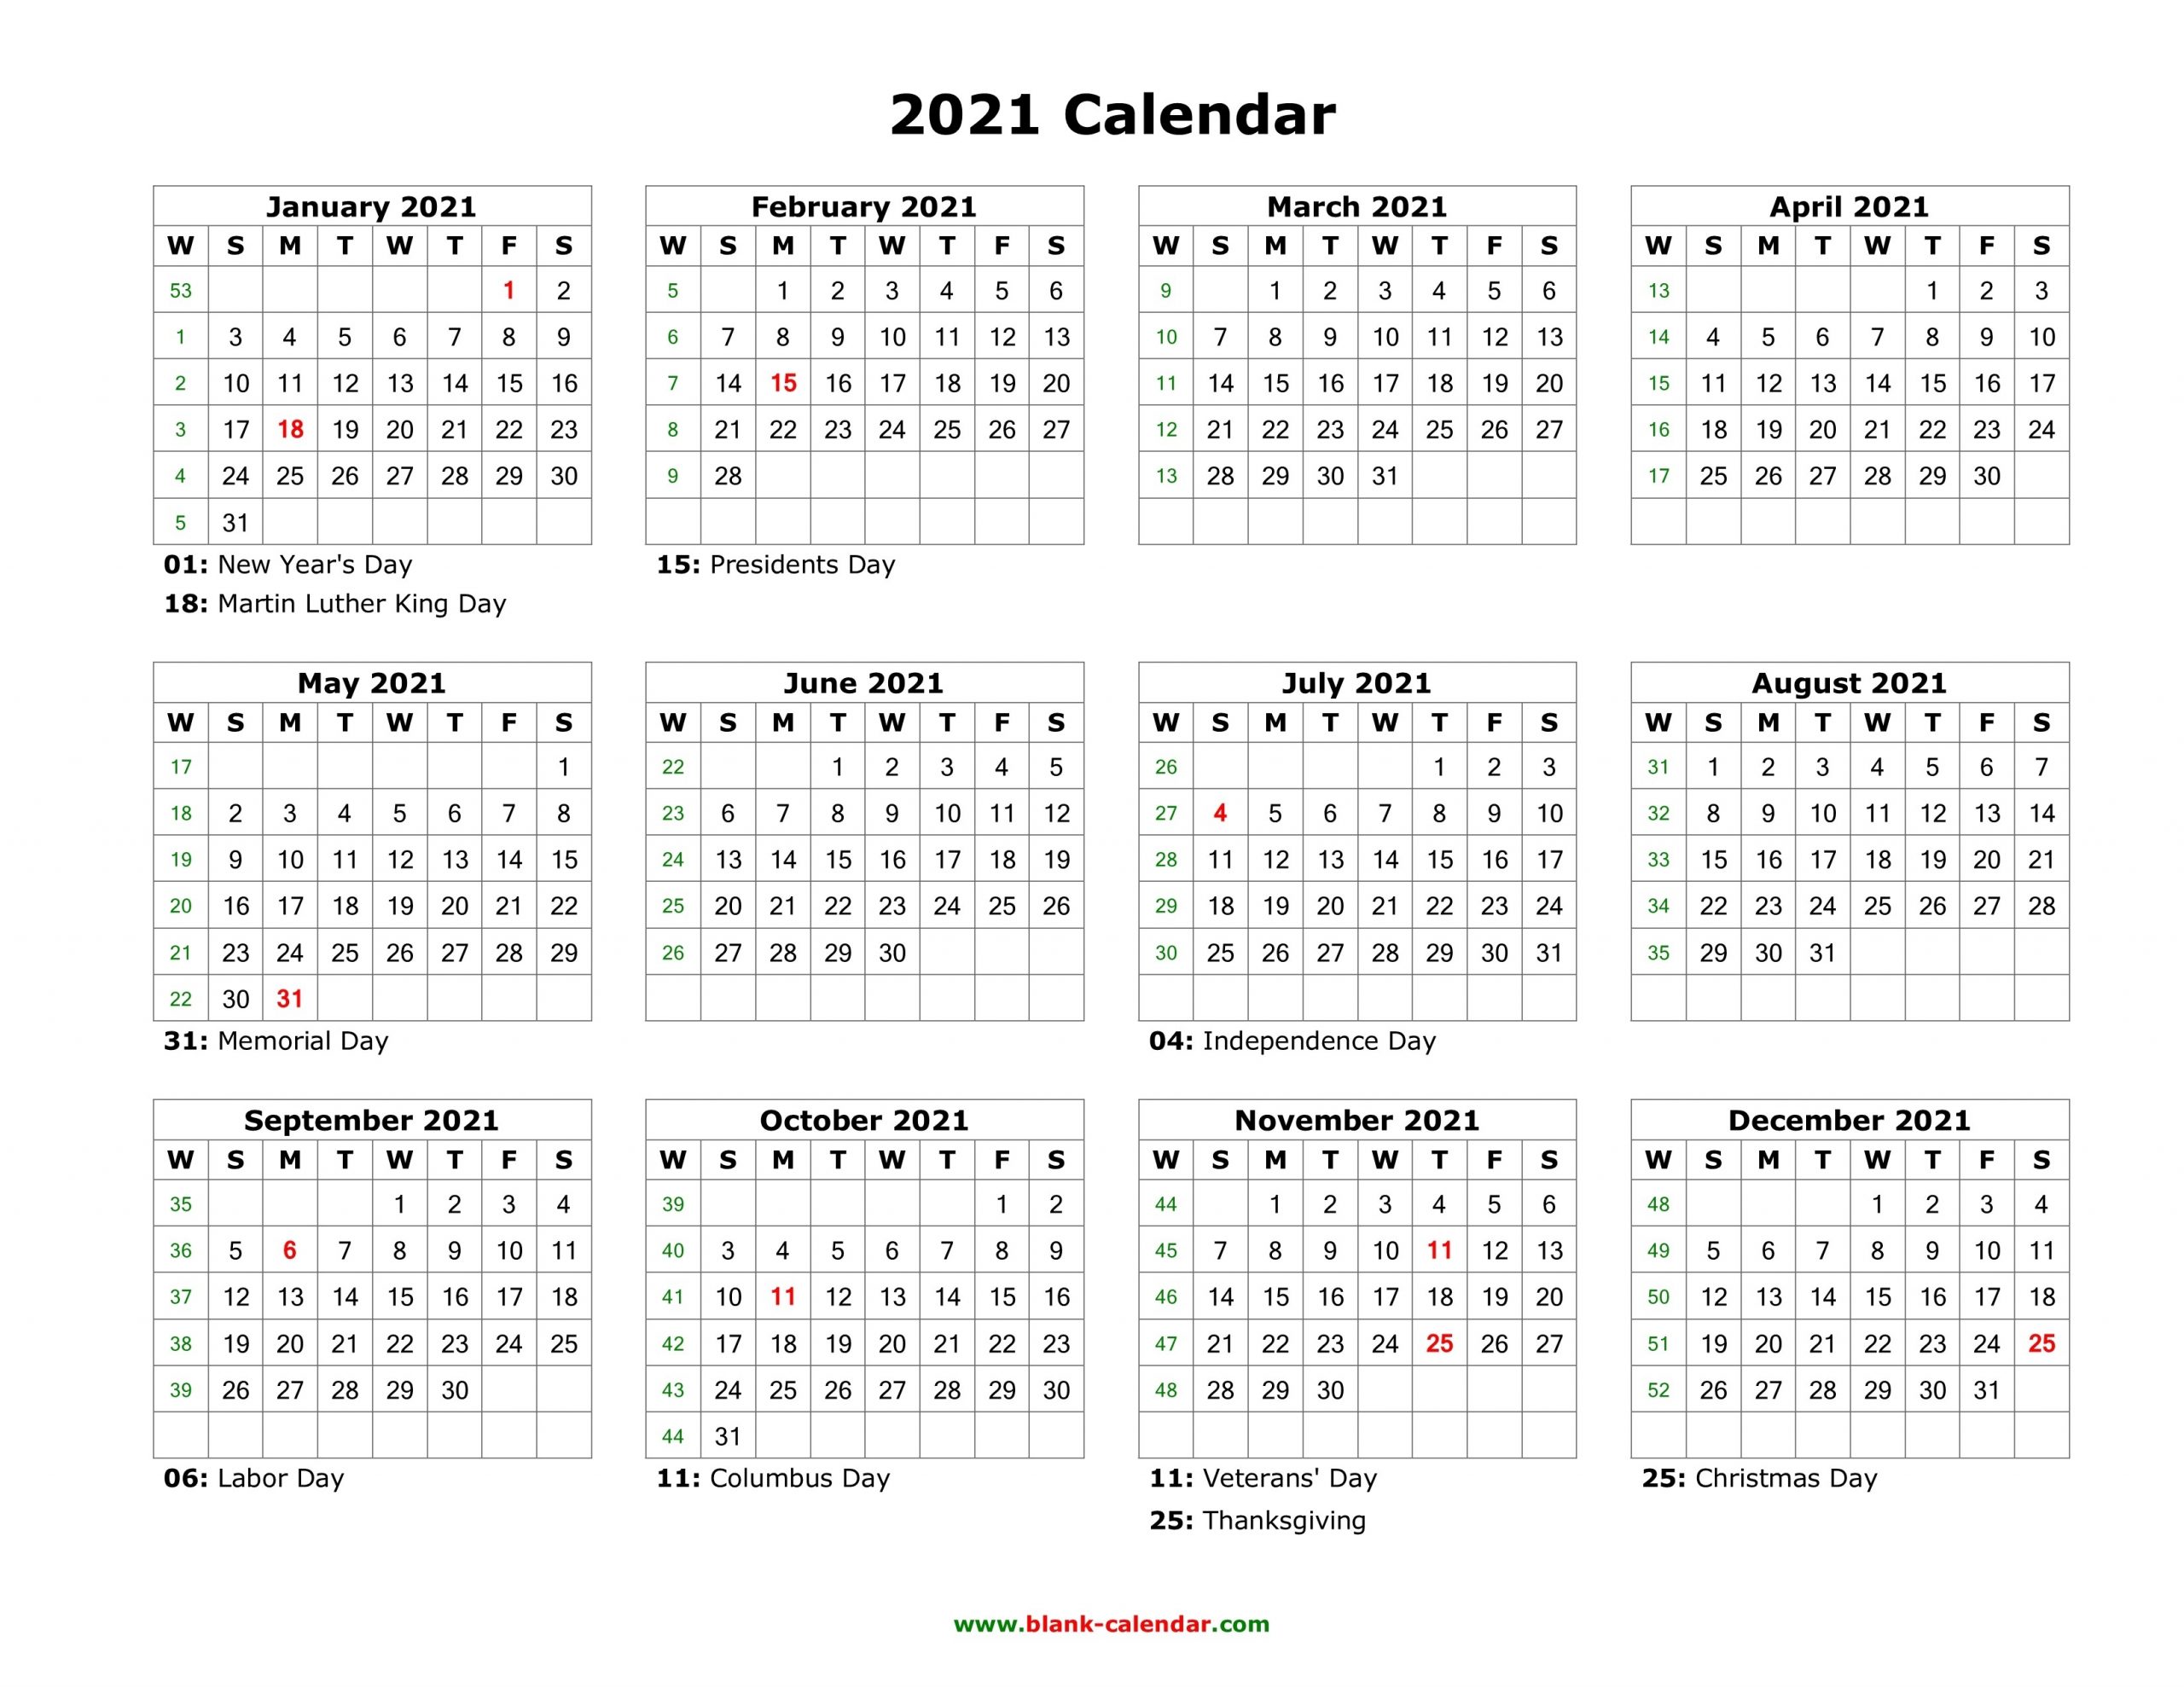 Blank Calendar 2021 | Free Download Calendar Templates-Microsoft Free Calendar Template 2021